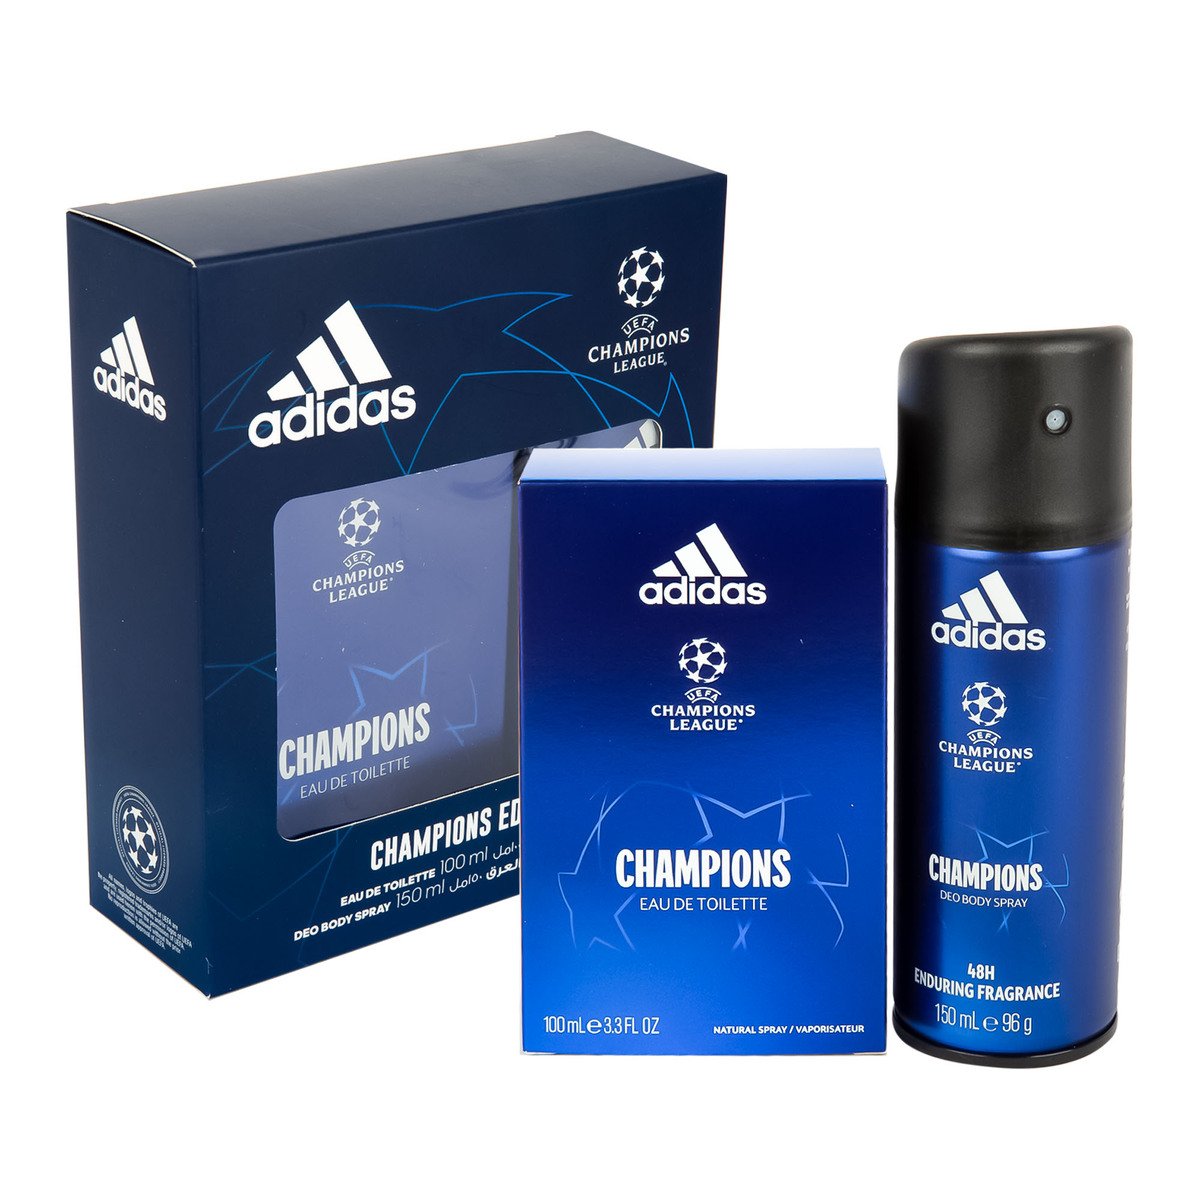 Adidas EDT UEFA Champion League 100 ml + Deo Body Spray 150 ml